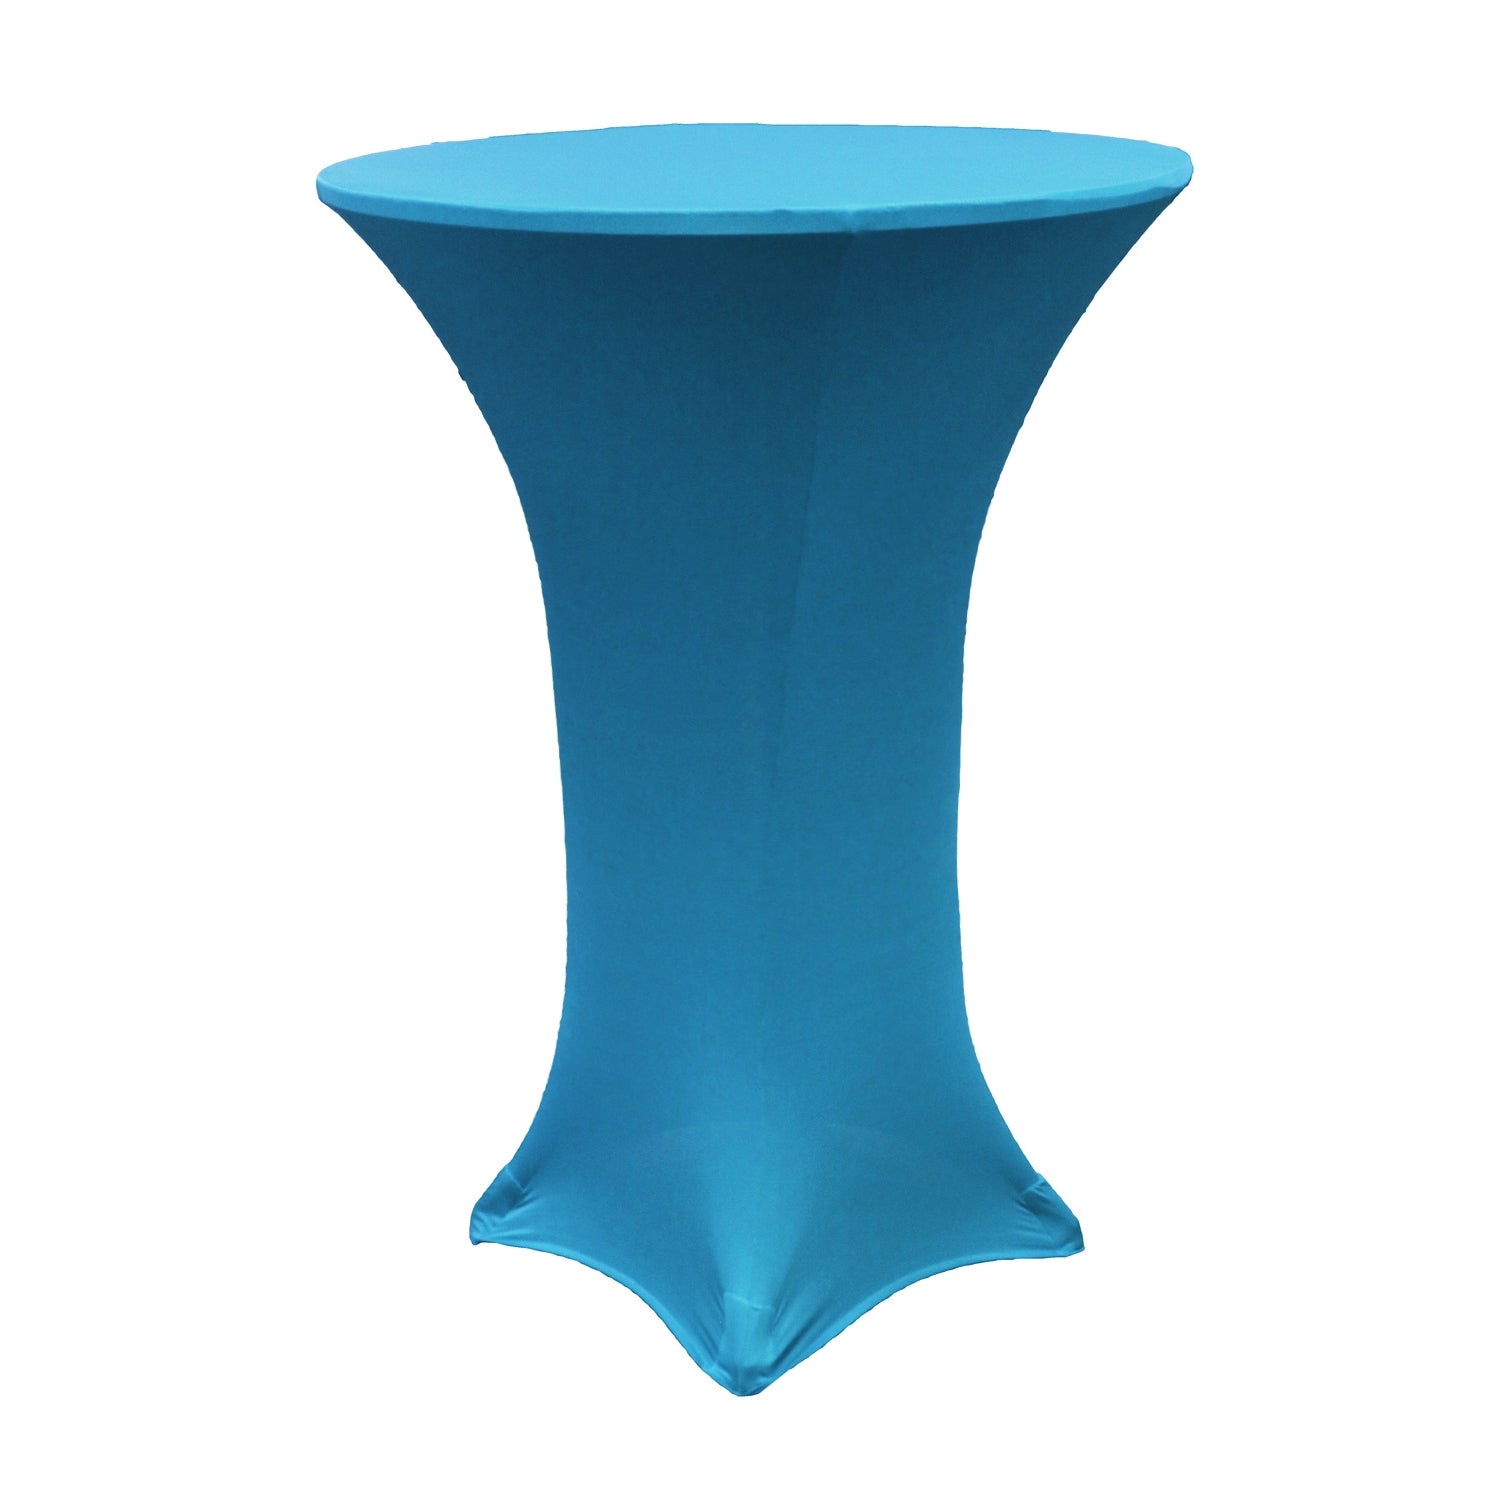 Spandex Cocktail Table Cover 36" Round - Aqua Blue - CV Linens